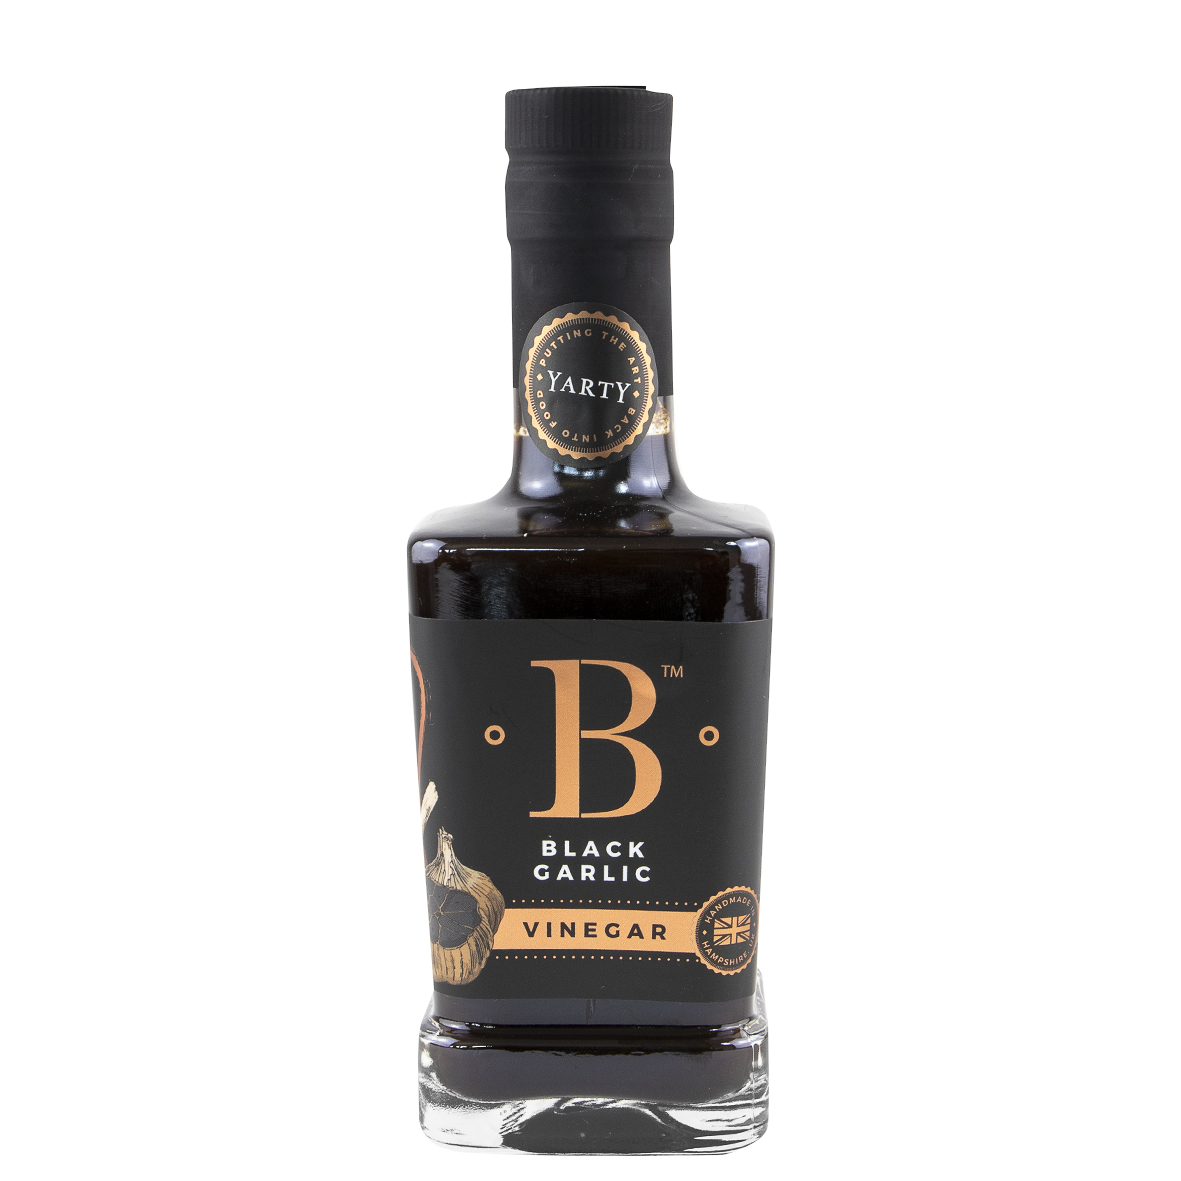 B Black Garlic Vinegar